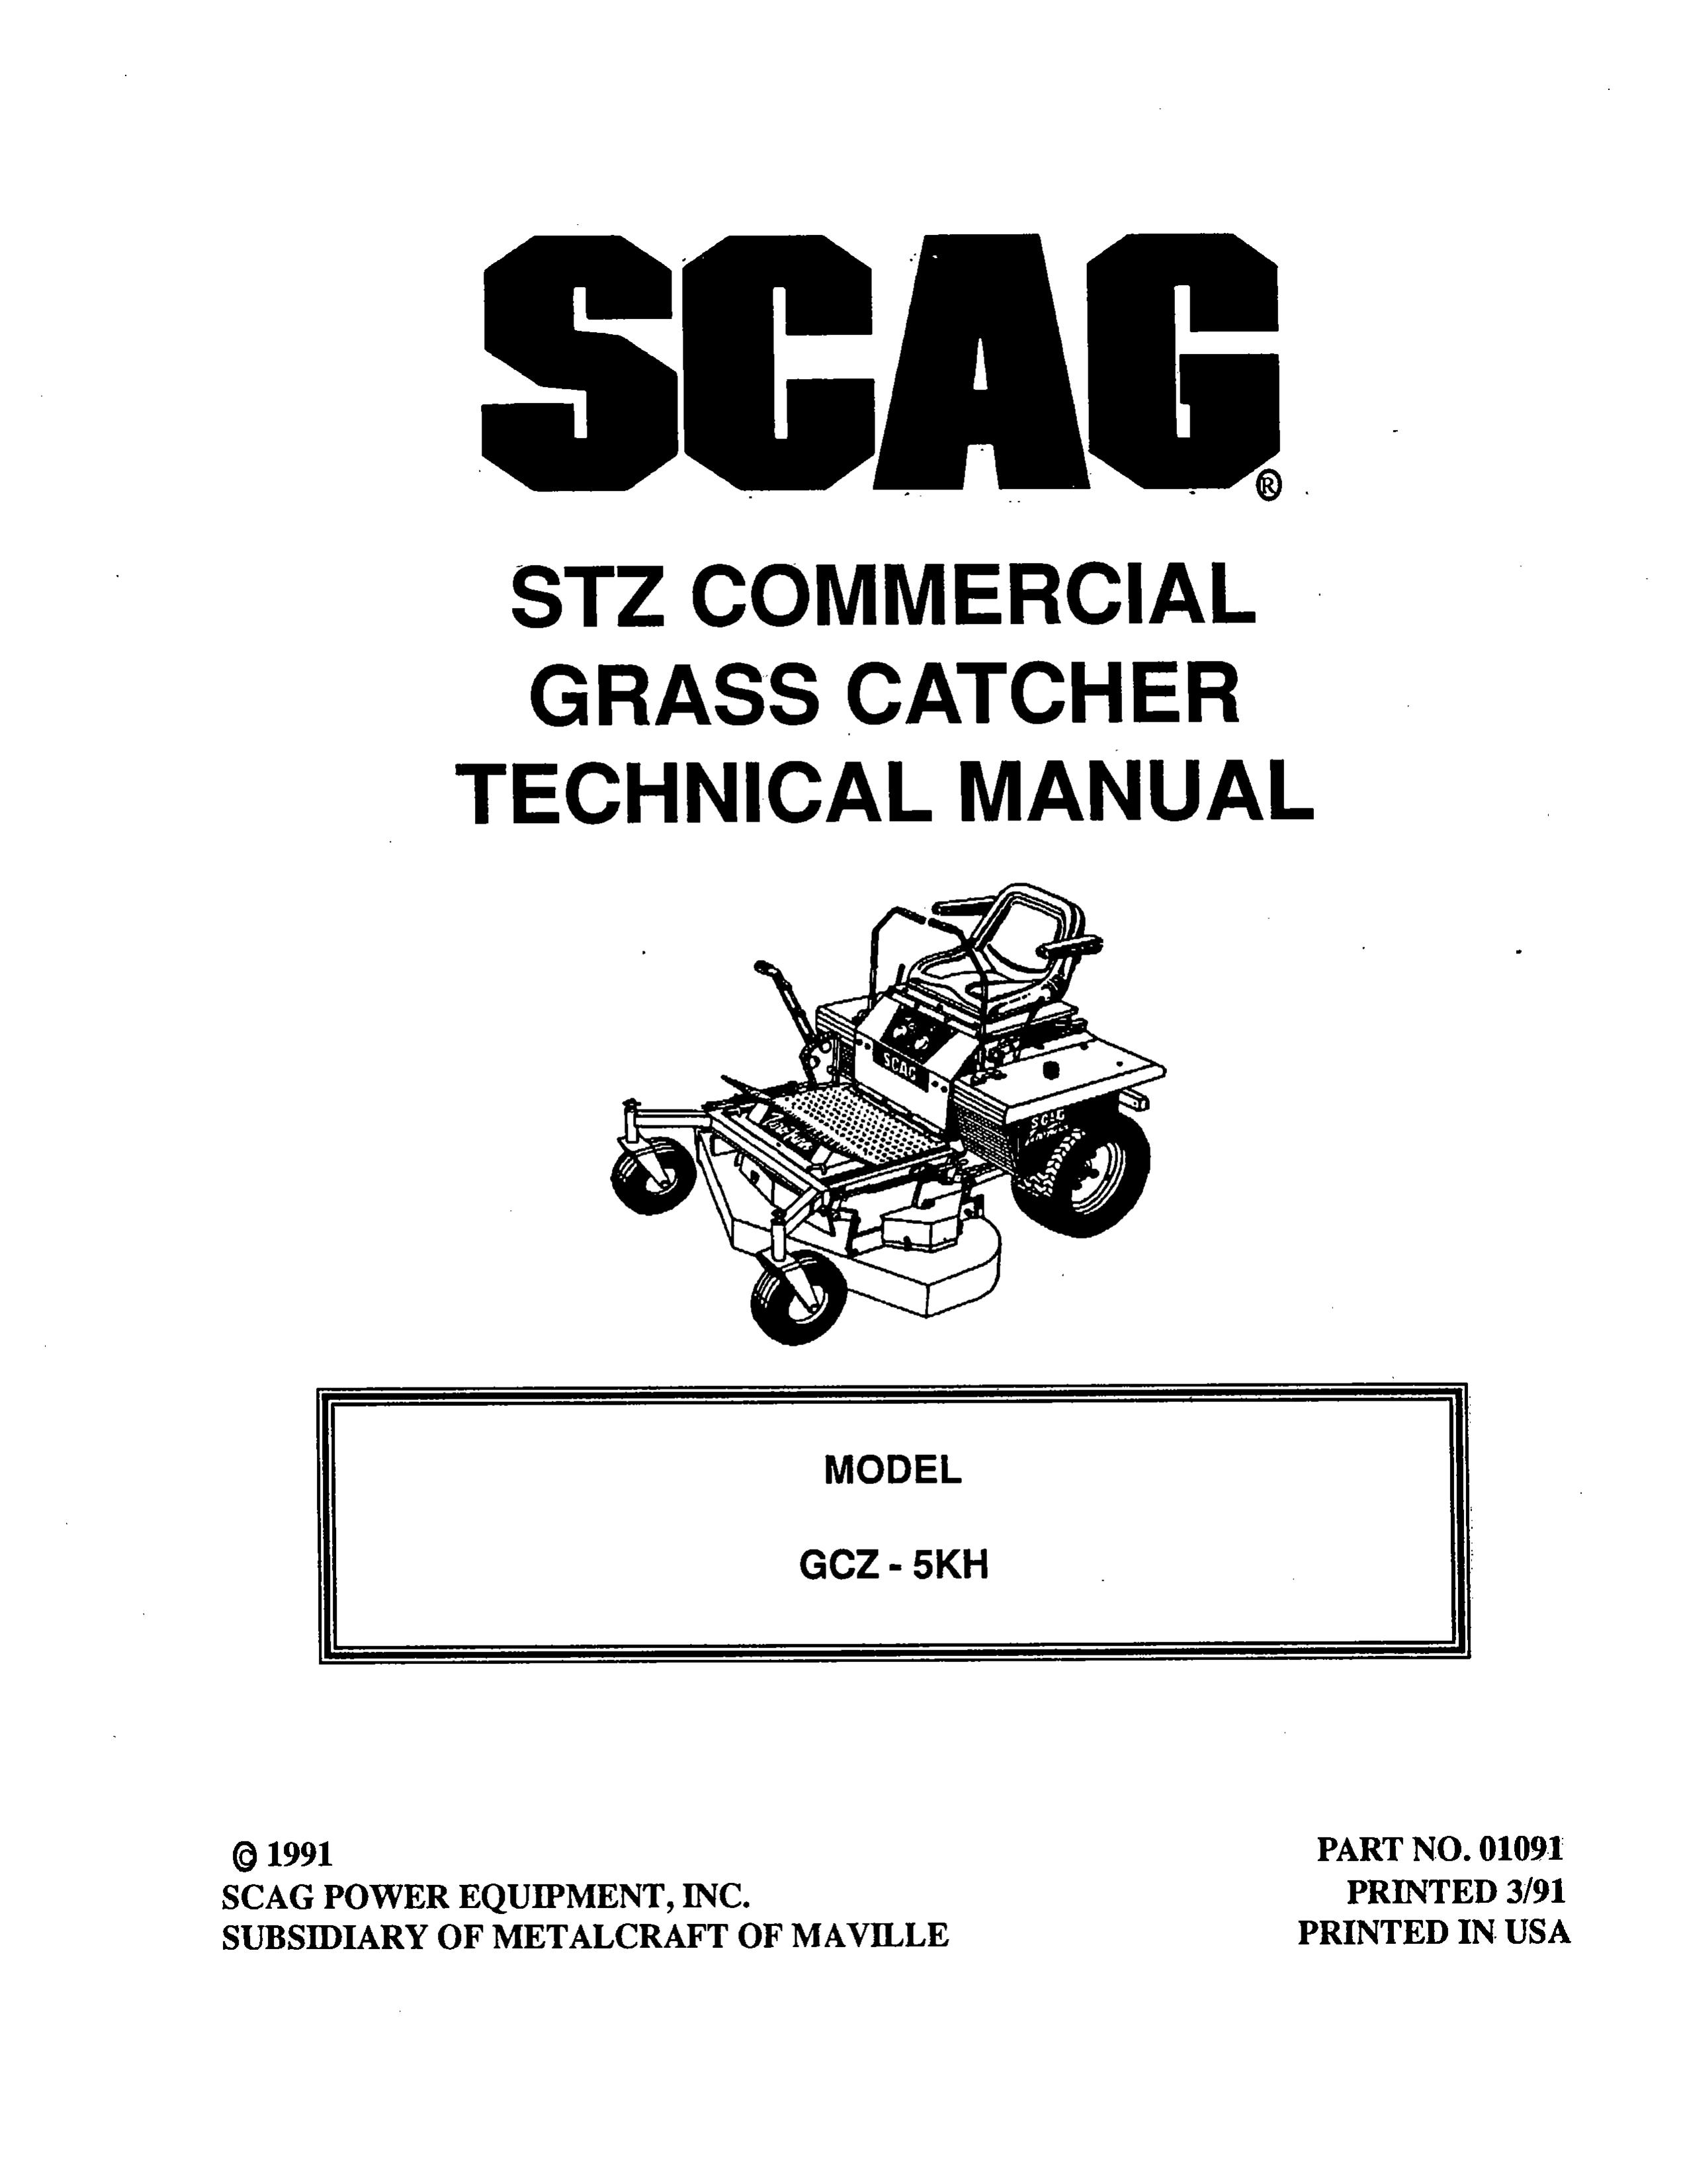 Scag Power Equipment GCZ-5KH Trimmer User Manual